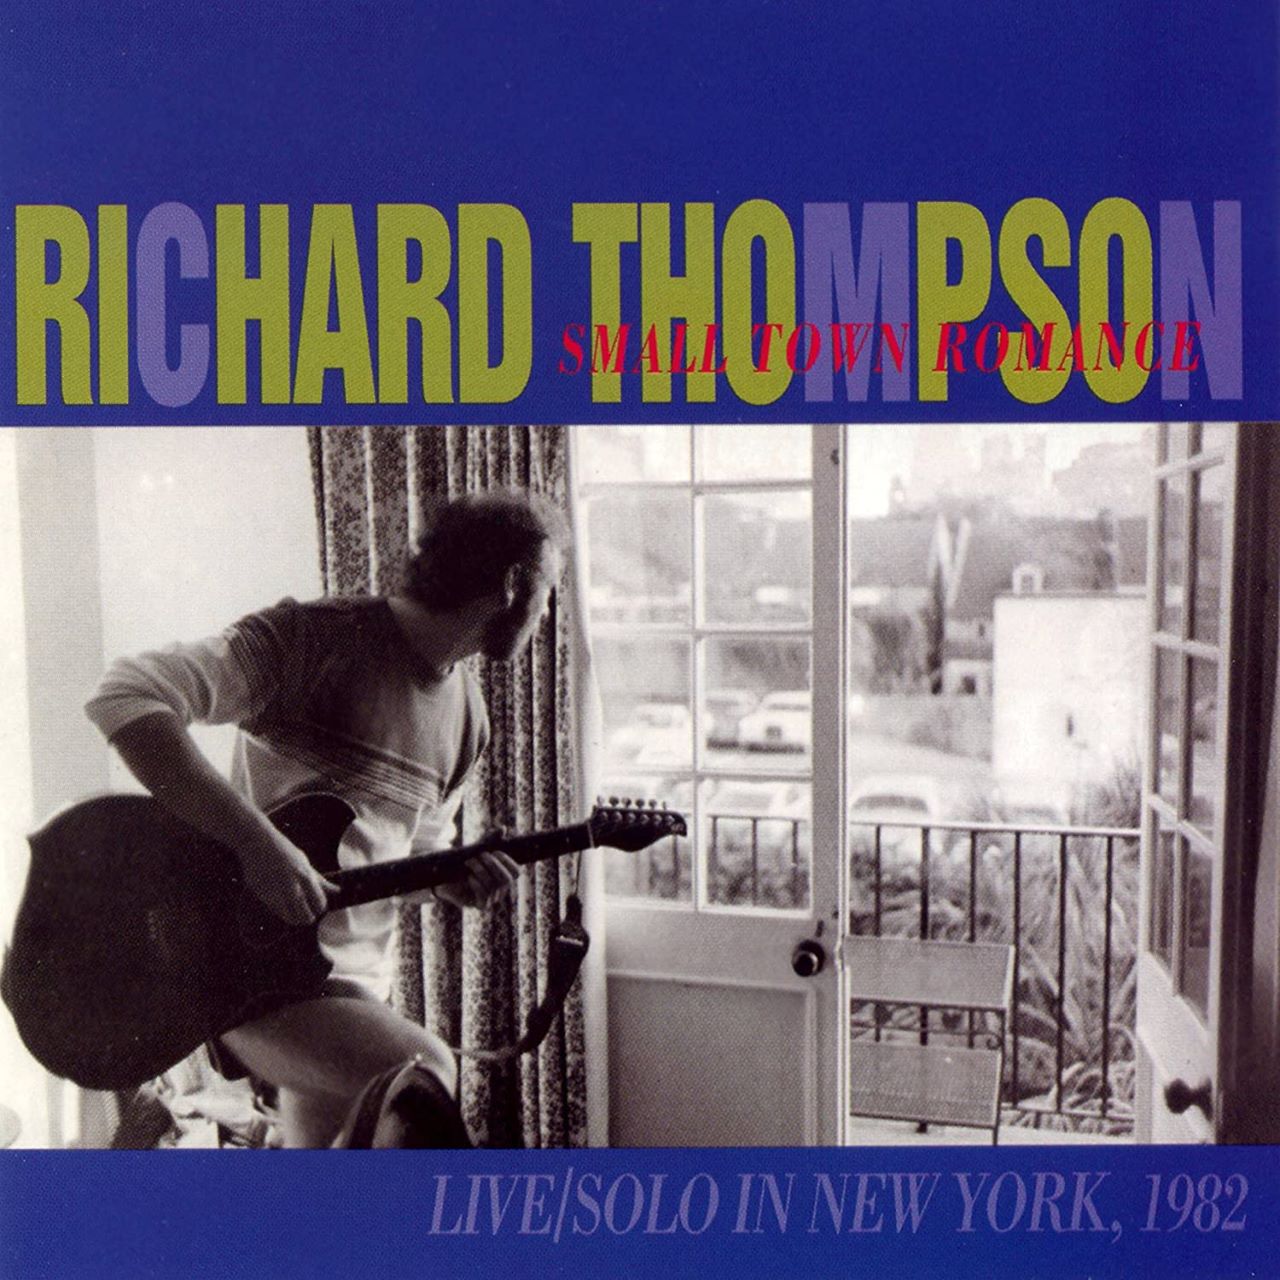 Richard Thompson - Small Town Romance covewr album